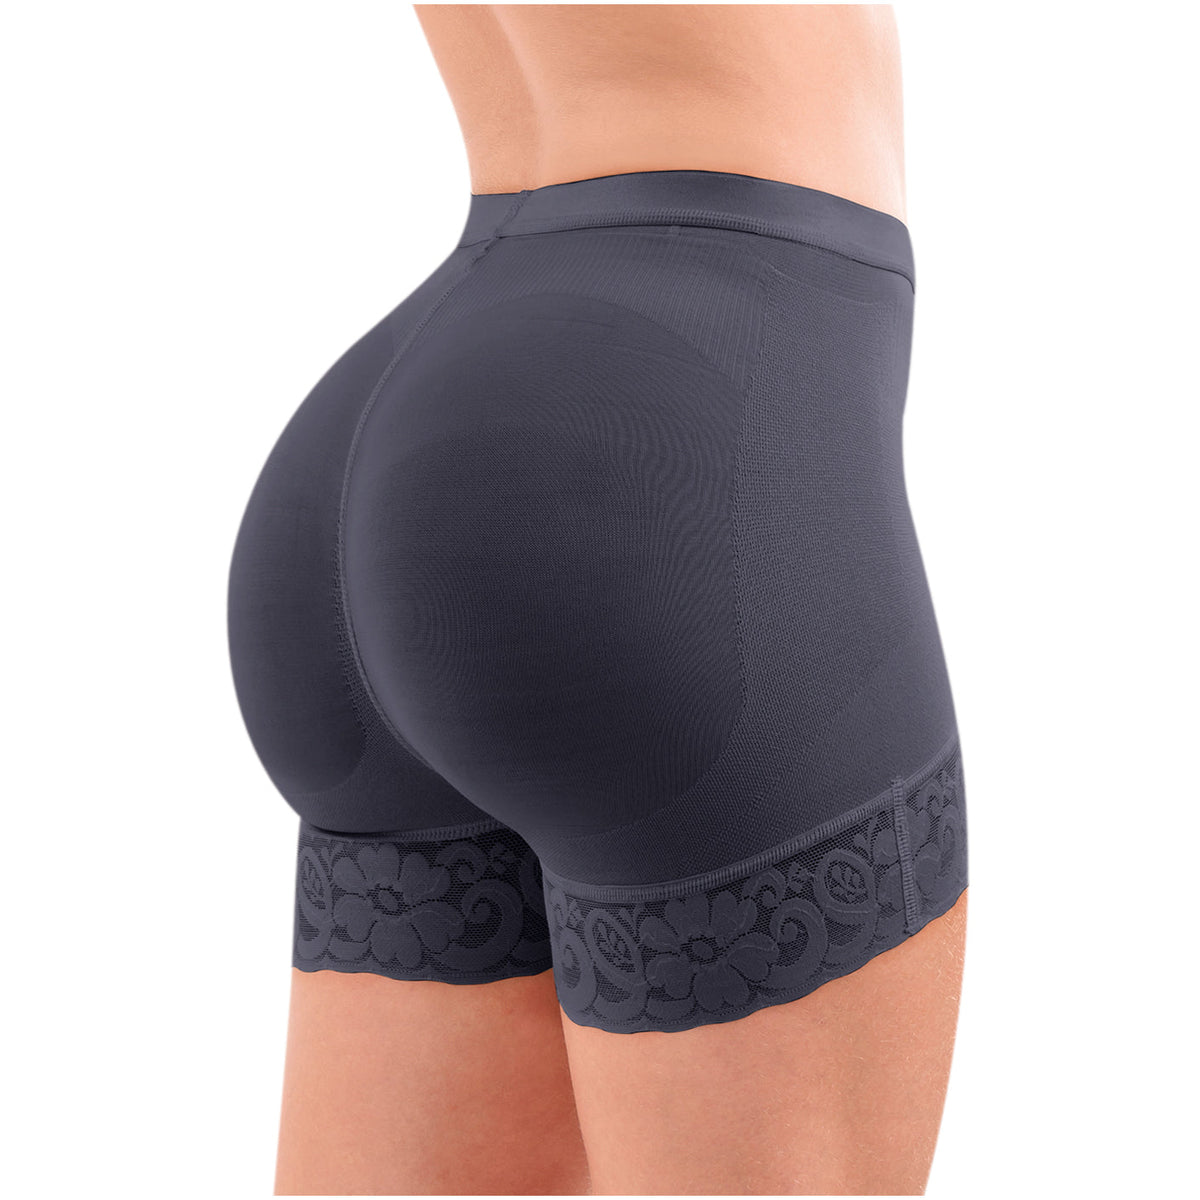 LT.Rose 23996 Butt Lifter Pantalones cortos de cintura alta para mujeres